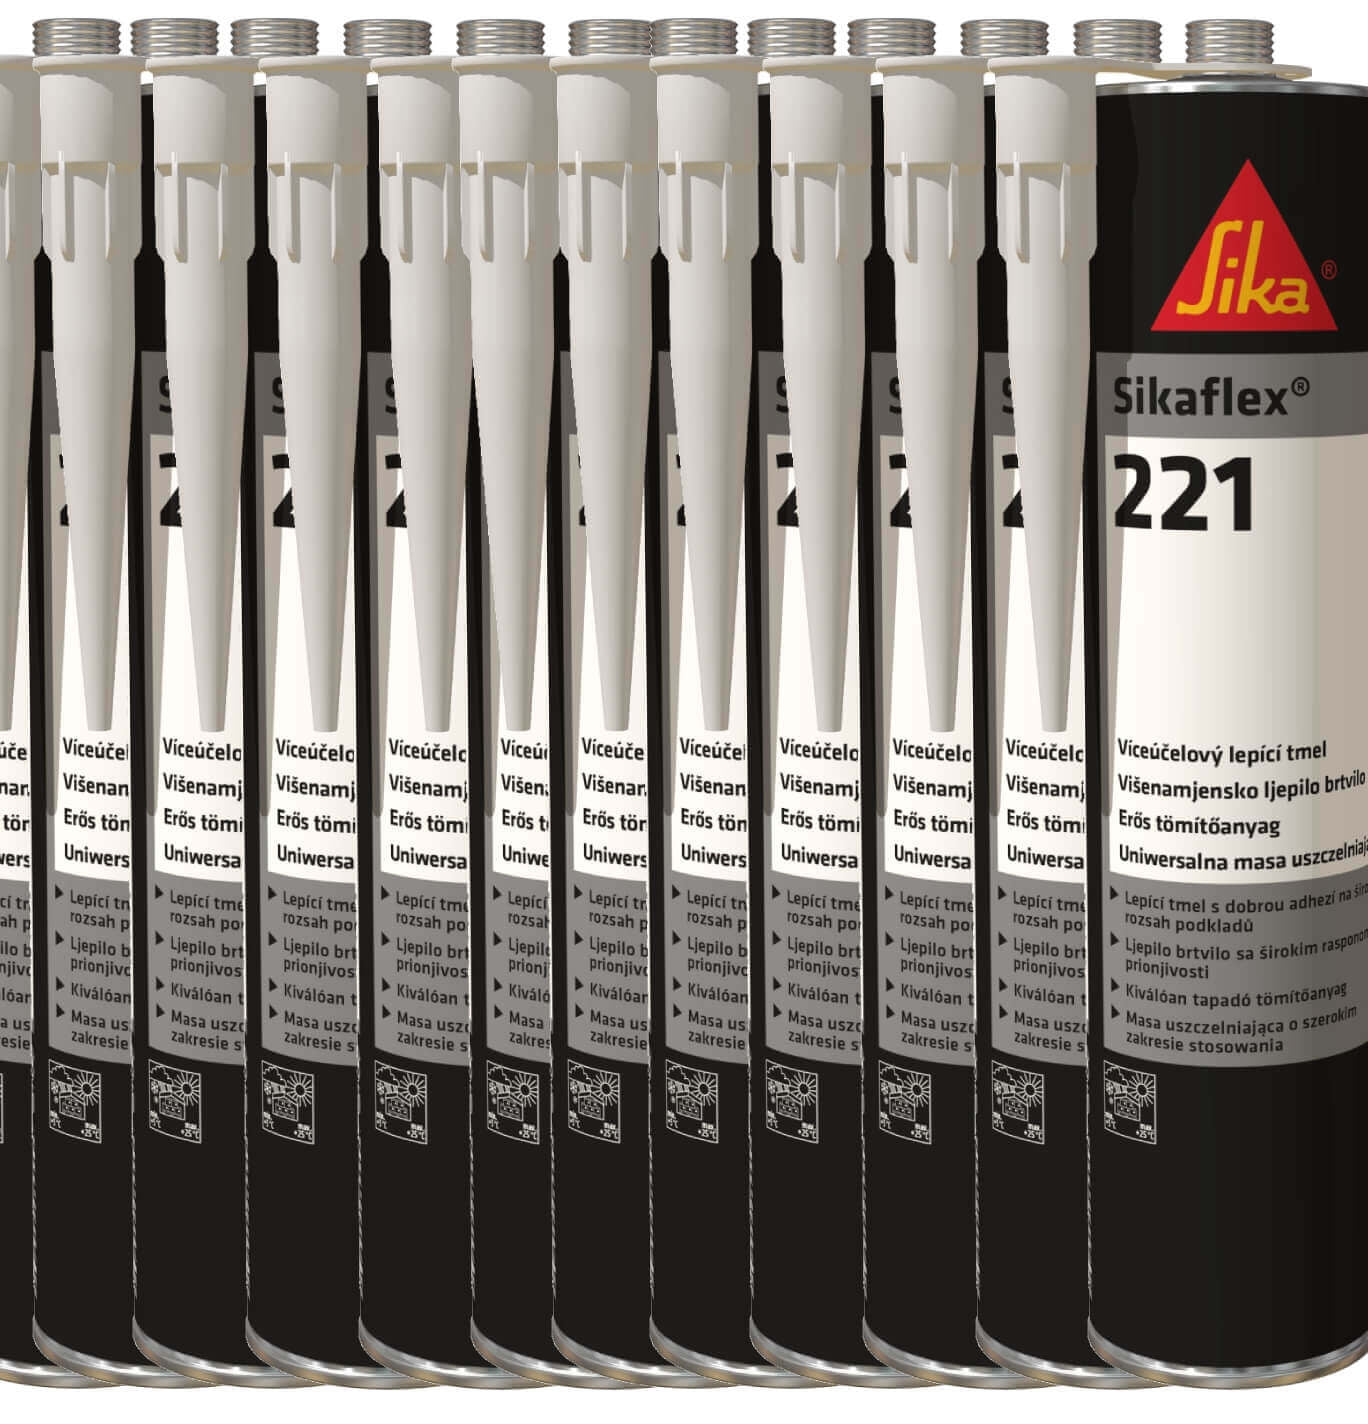 12 x Sikaflex 221 Black Multi Purpose Adhesive Sealant Bundle Image